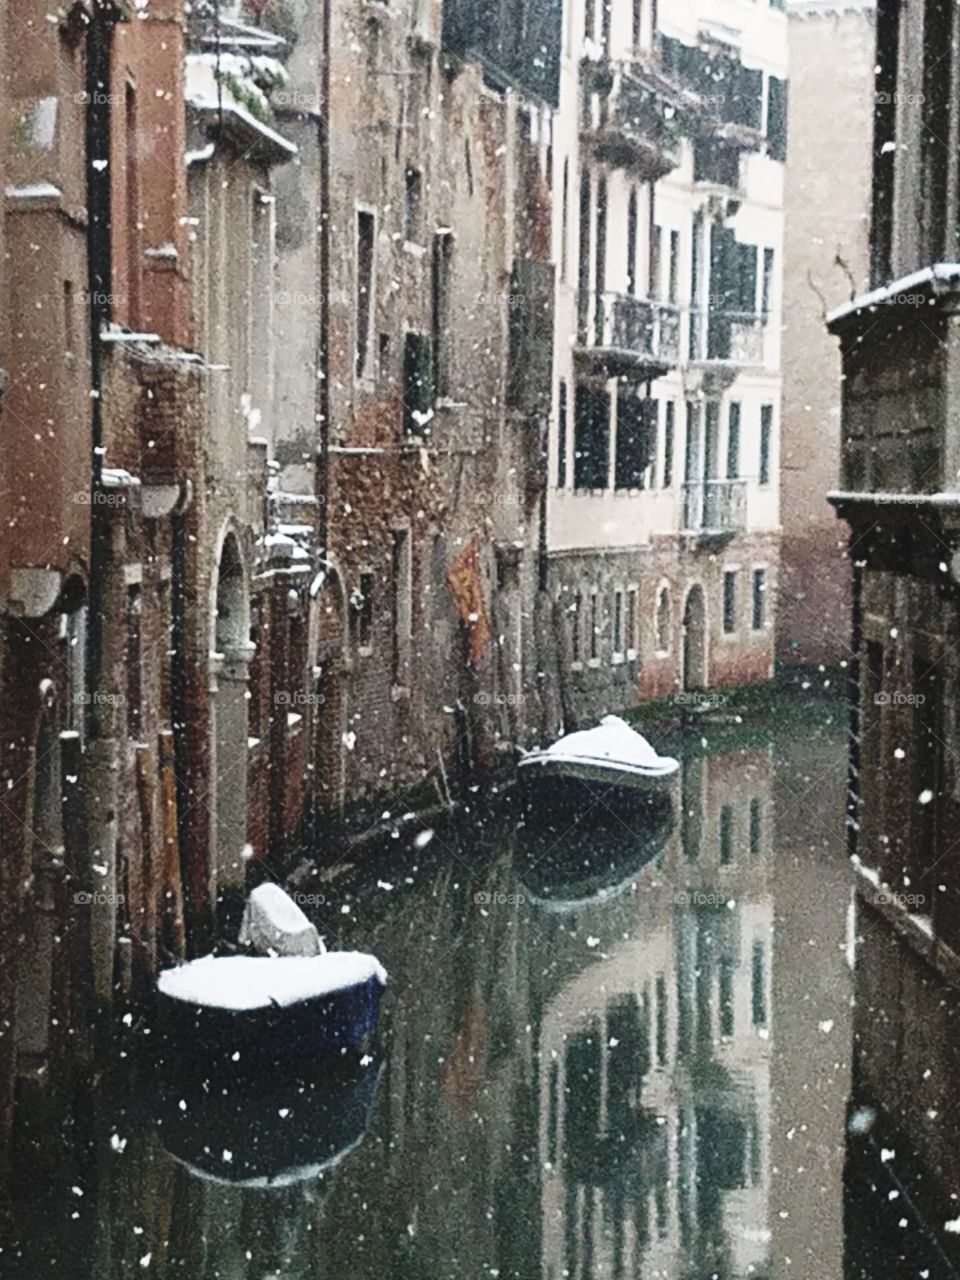 snow in Venice